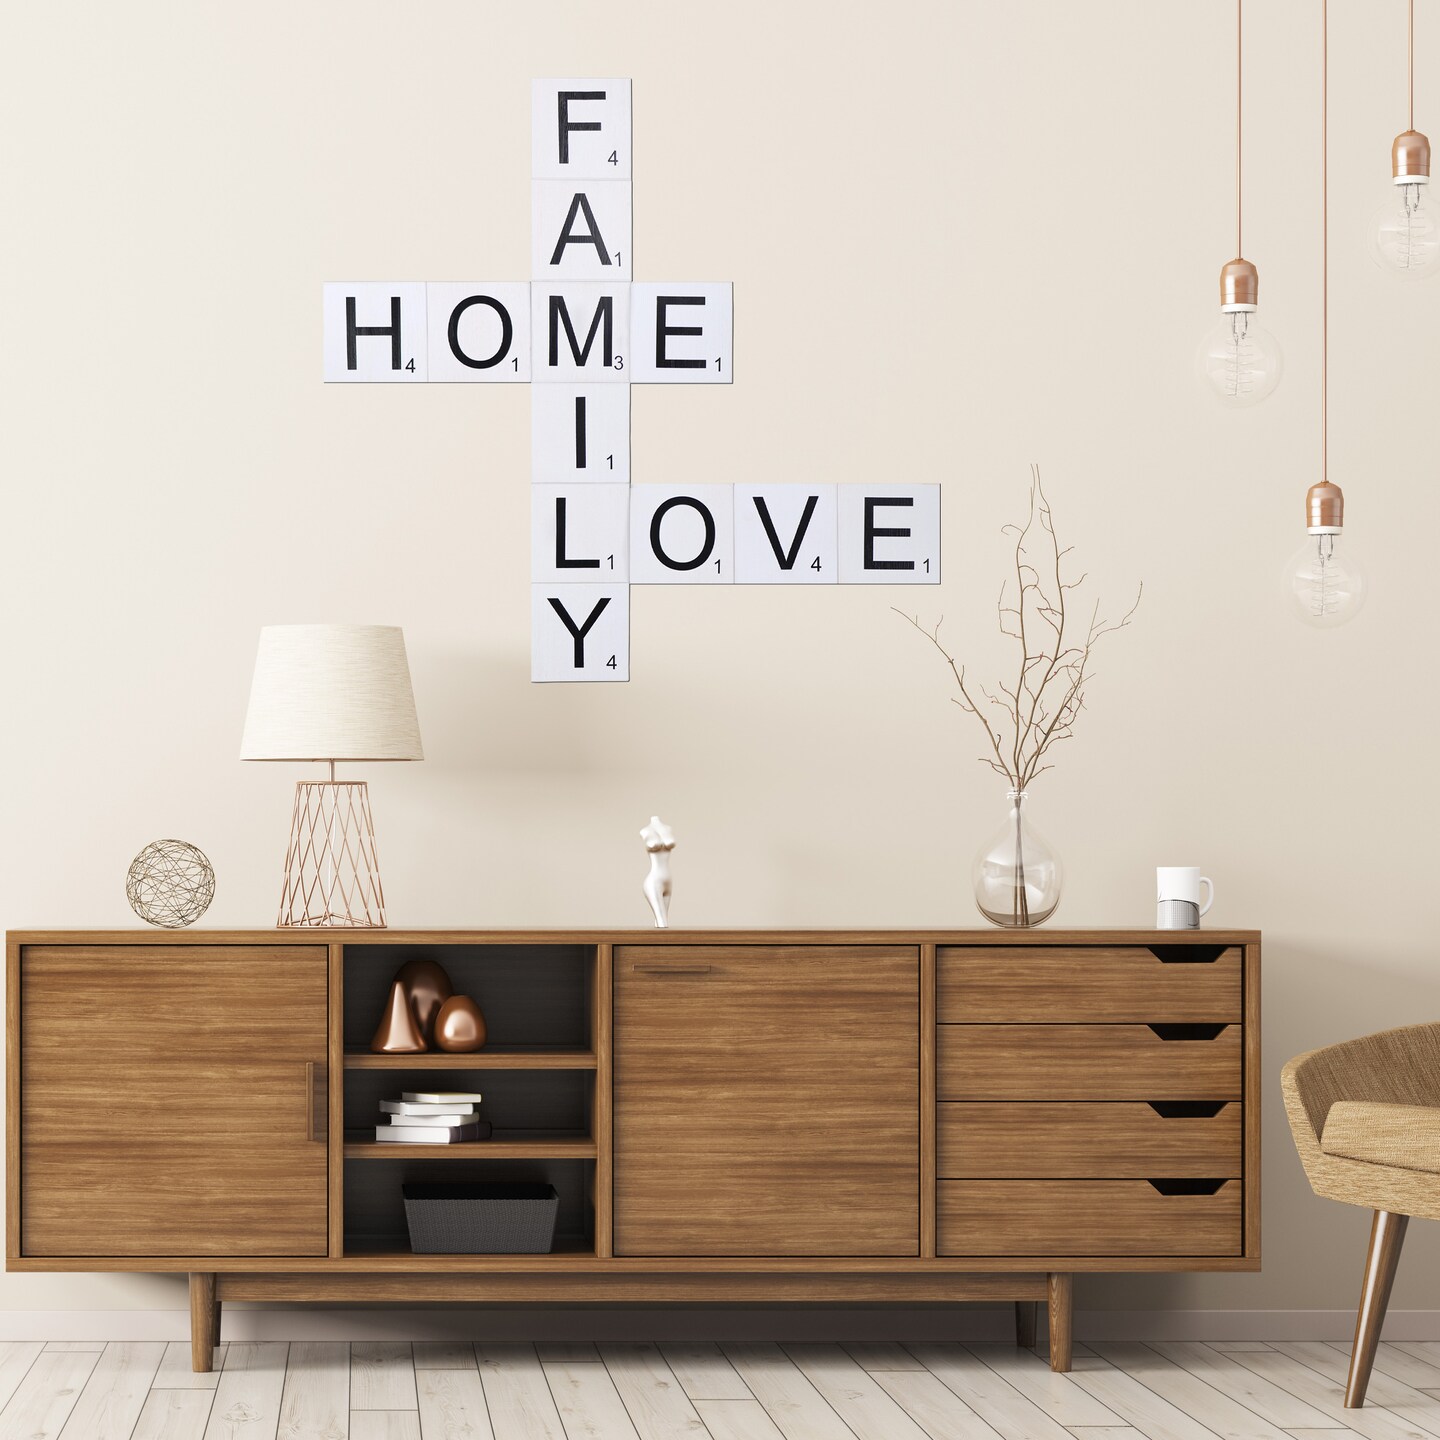 7Penn Rustic Living Room Decor - Farmhouse Crossword Letters Wall Family Decor